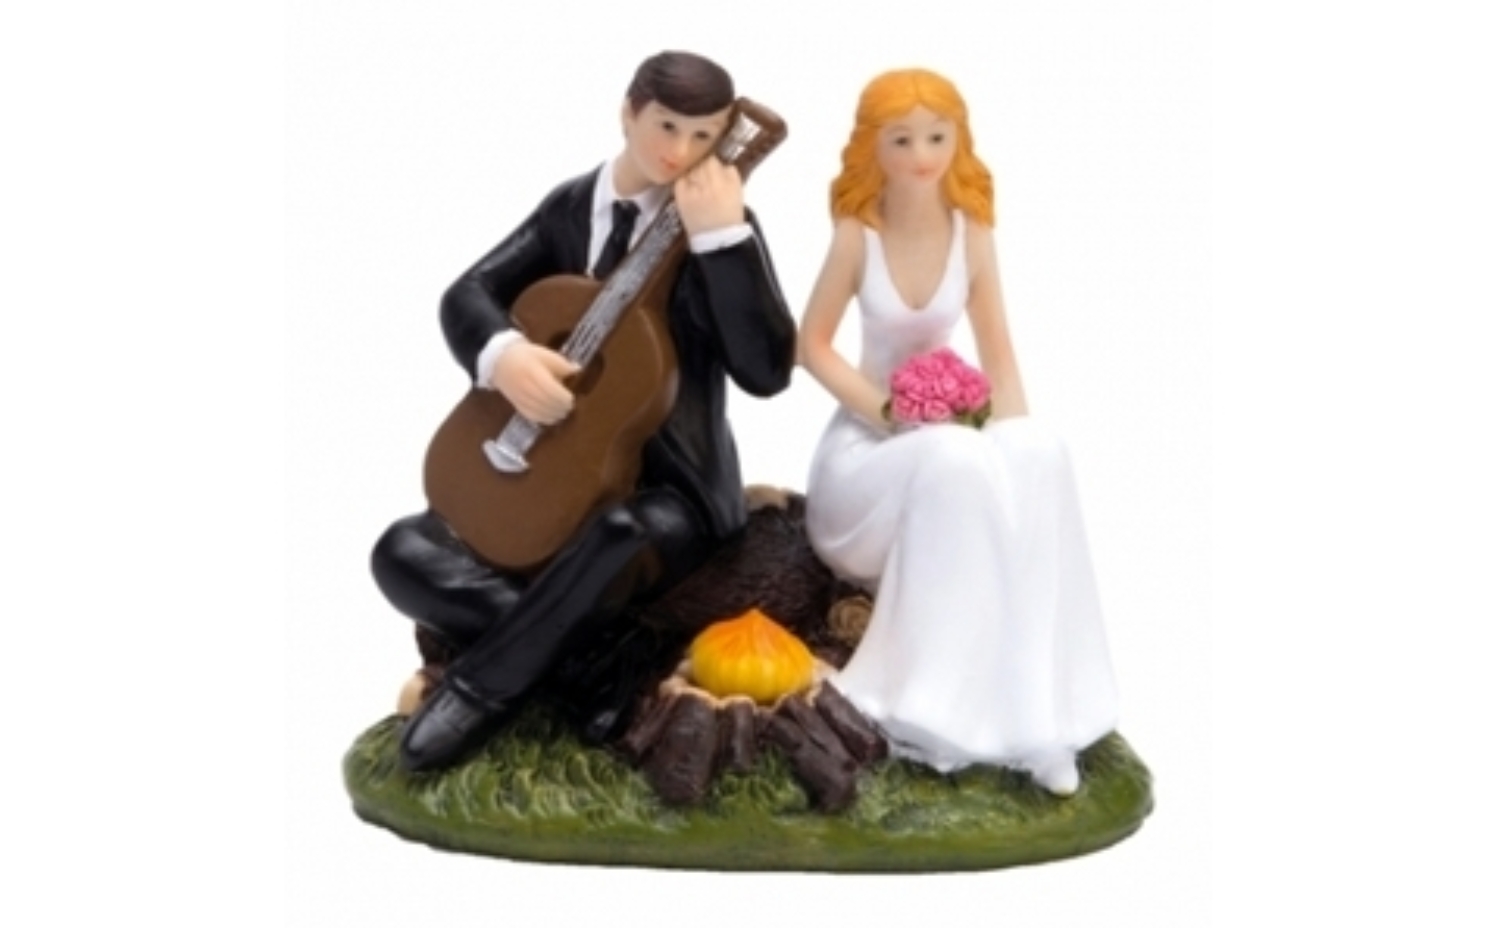 Sujet Gâteau Mariage Couple Mariés Guitare Le Comptoir de la Patisserie